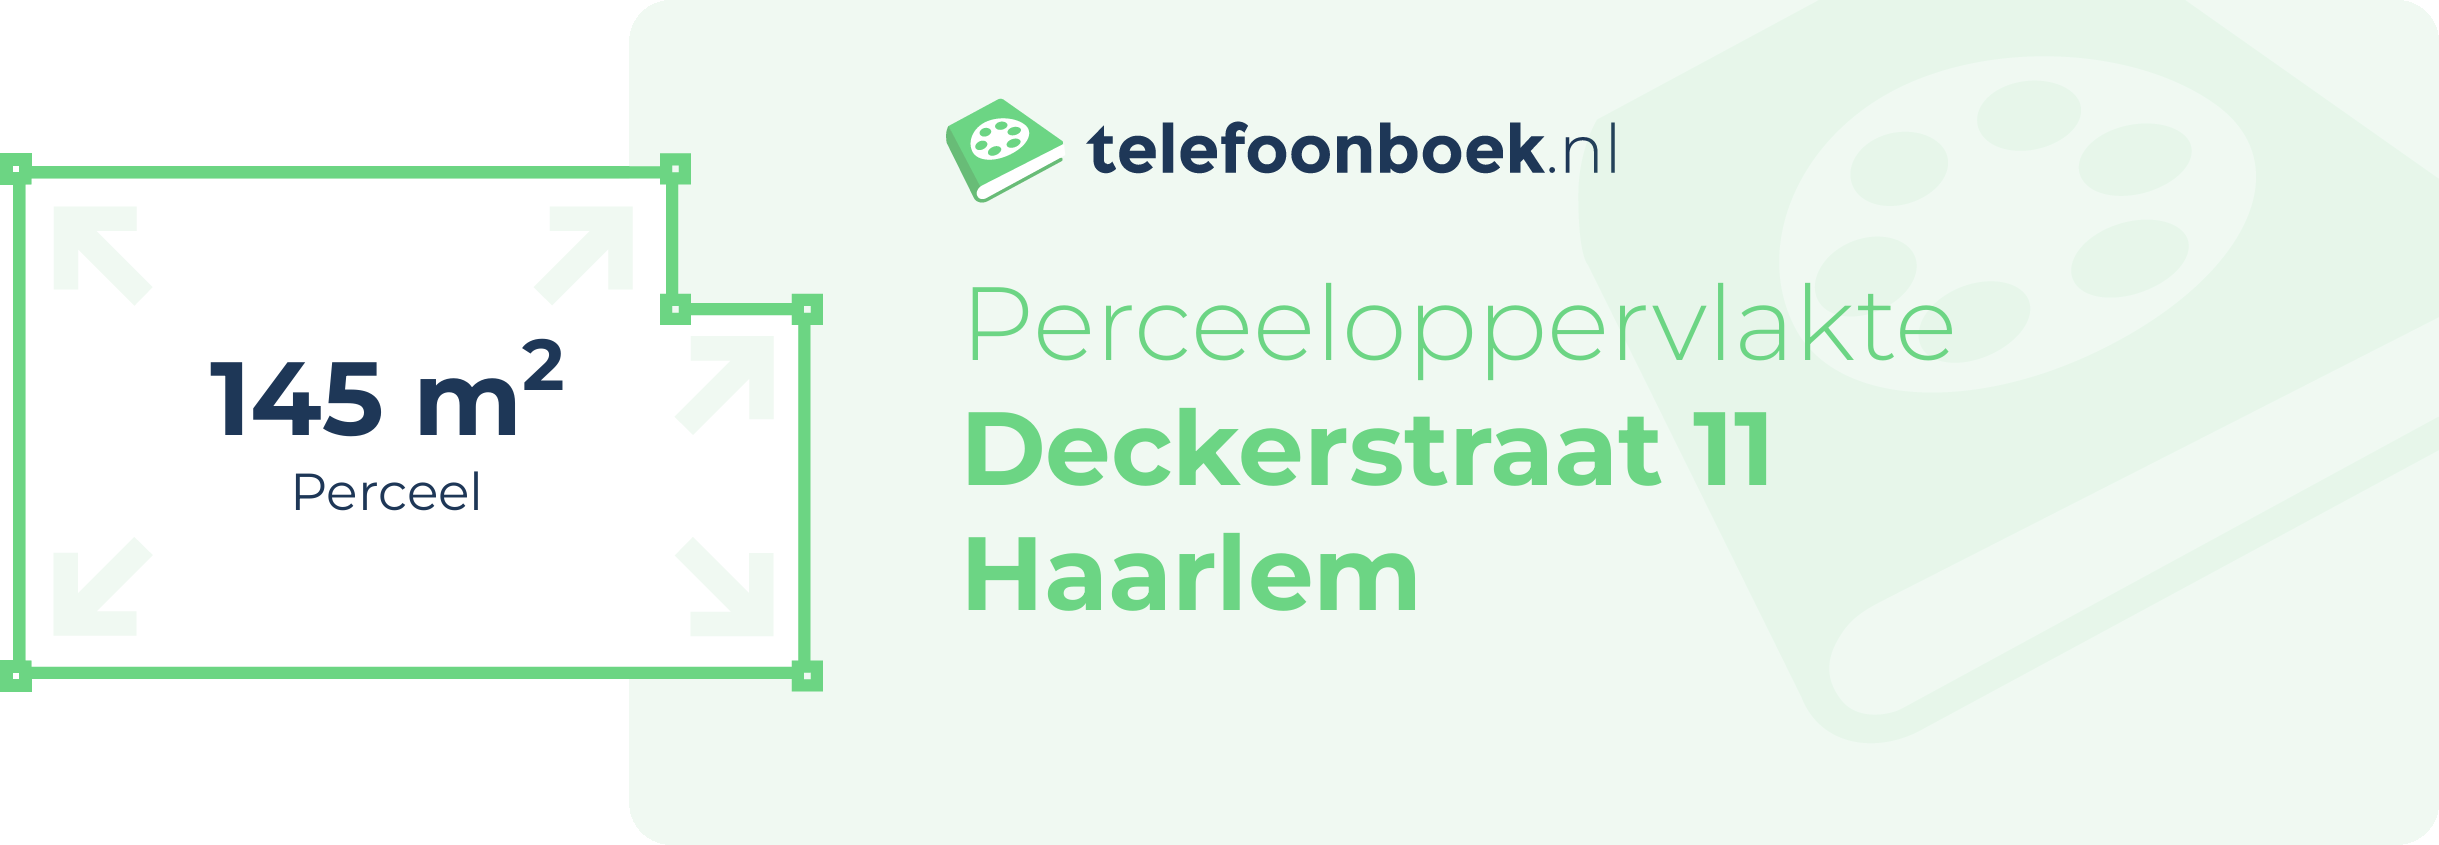 Perceeloppervlakte Deckerstraat 11 Haarlem